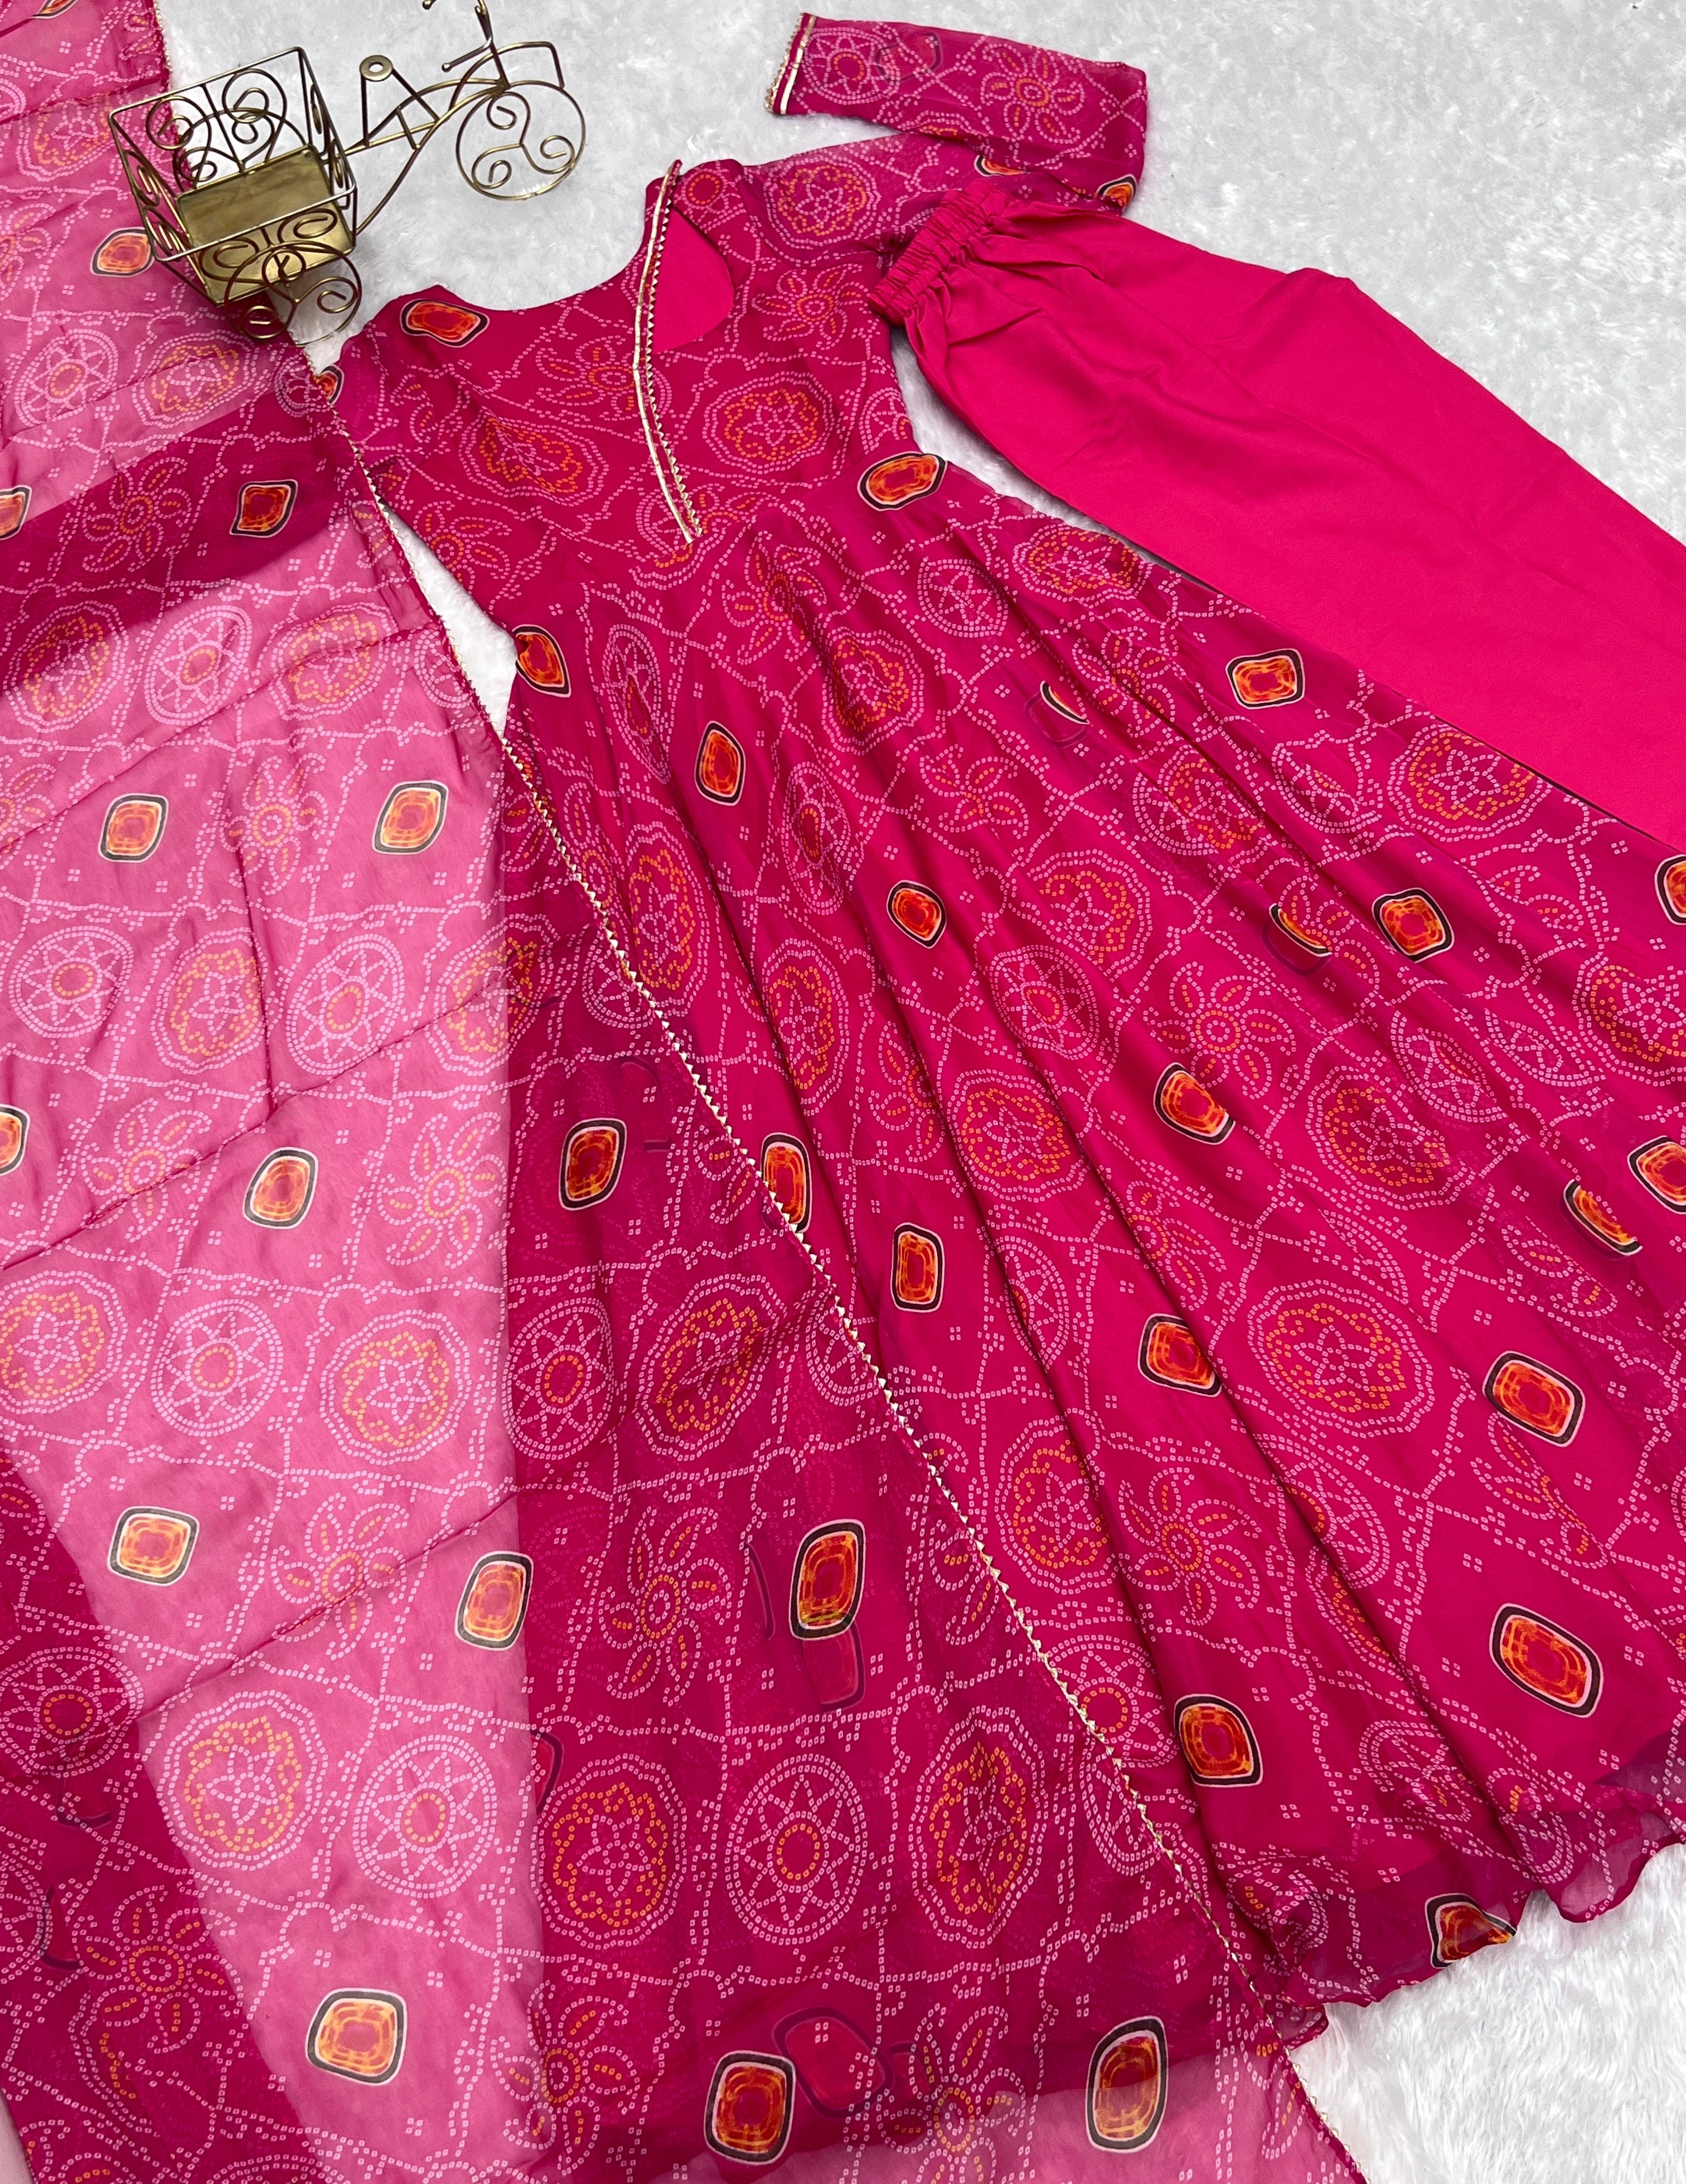 Stylish Neck Pattern Pink Color Anarkali Suit